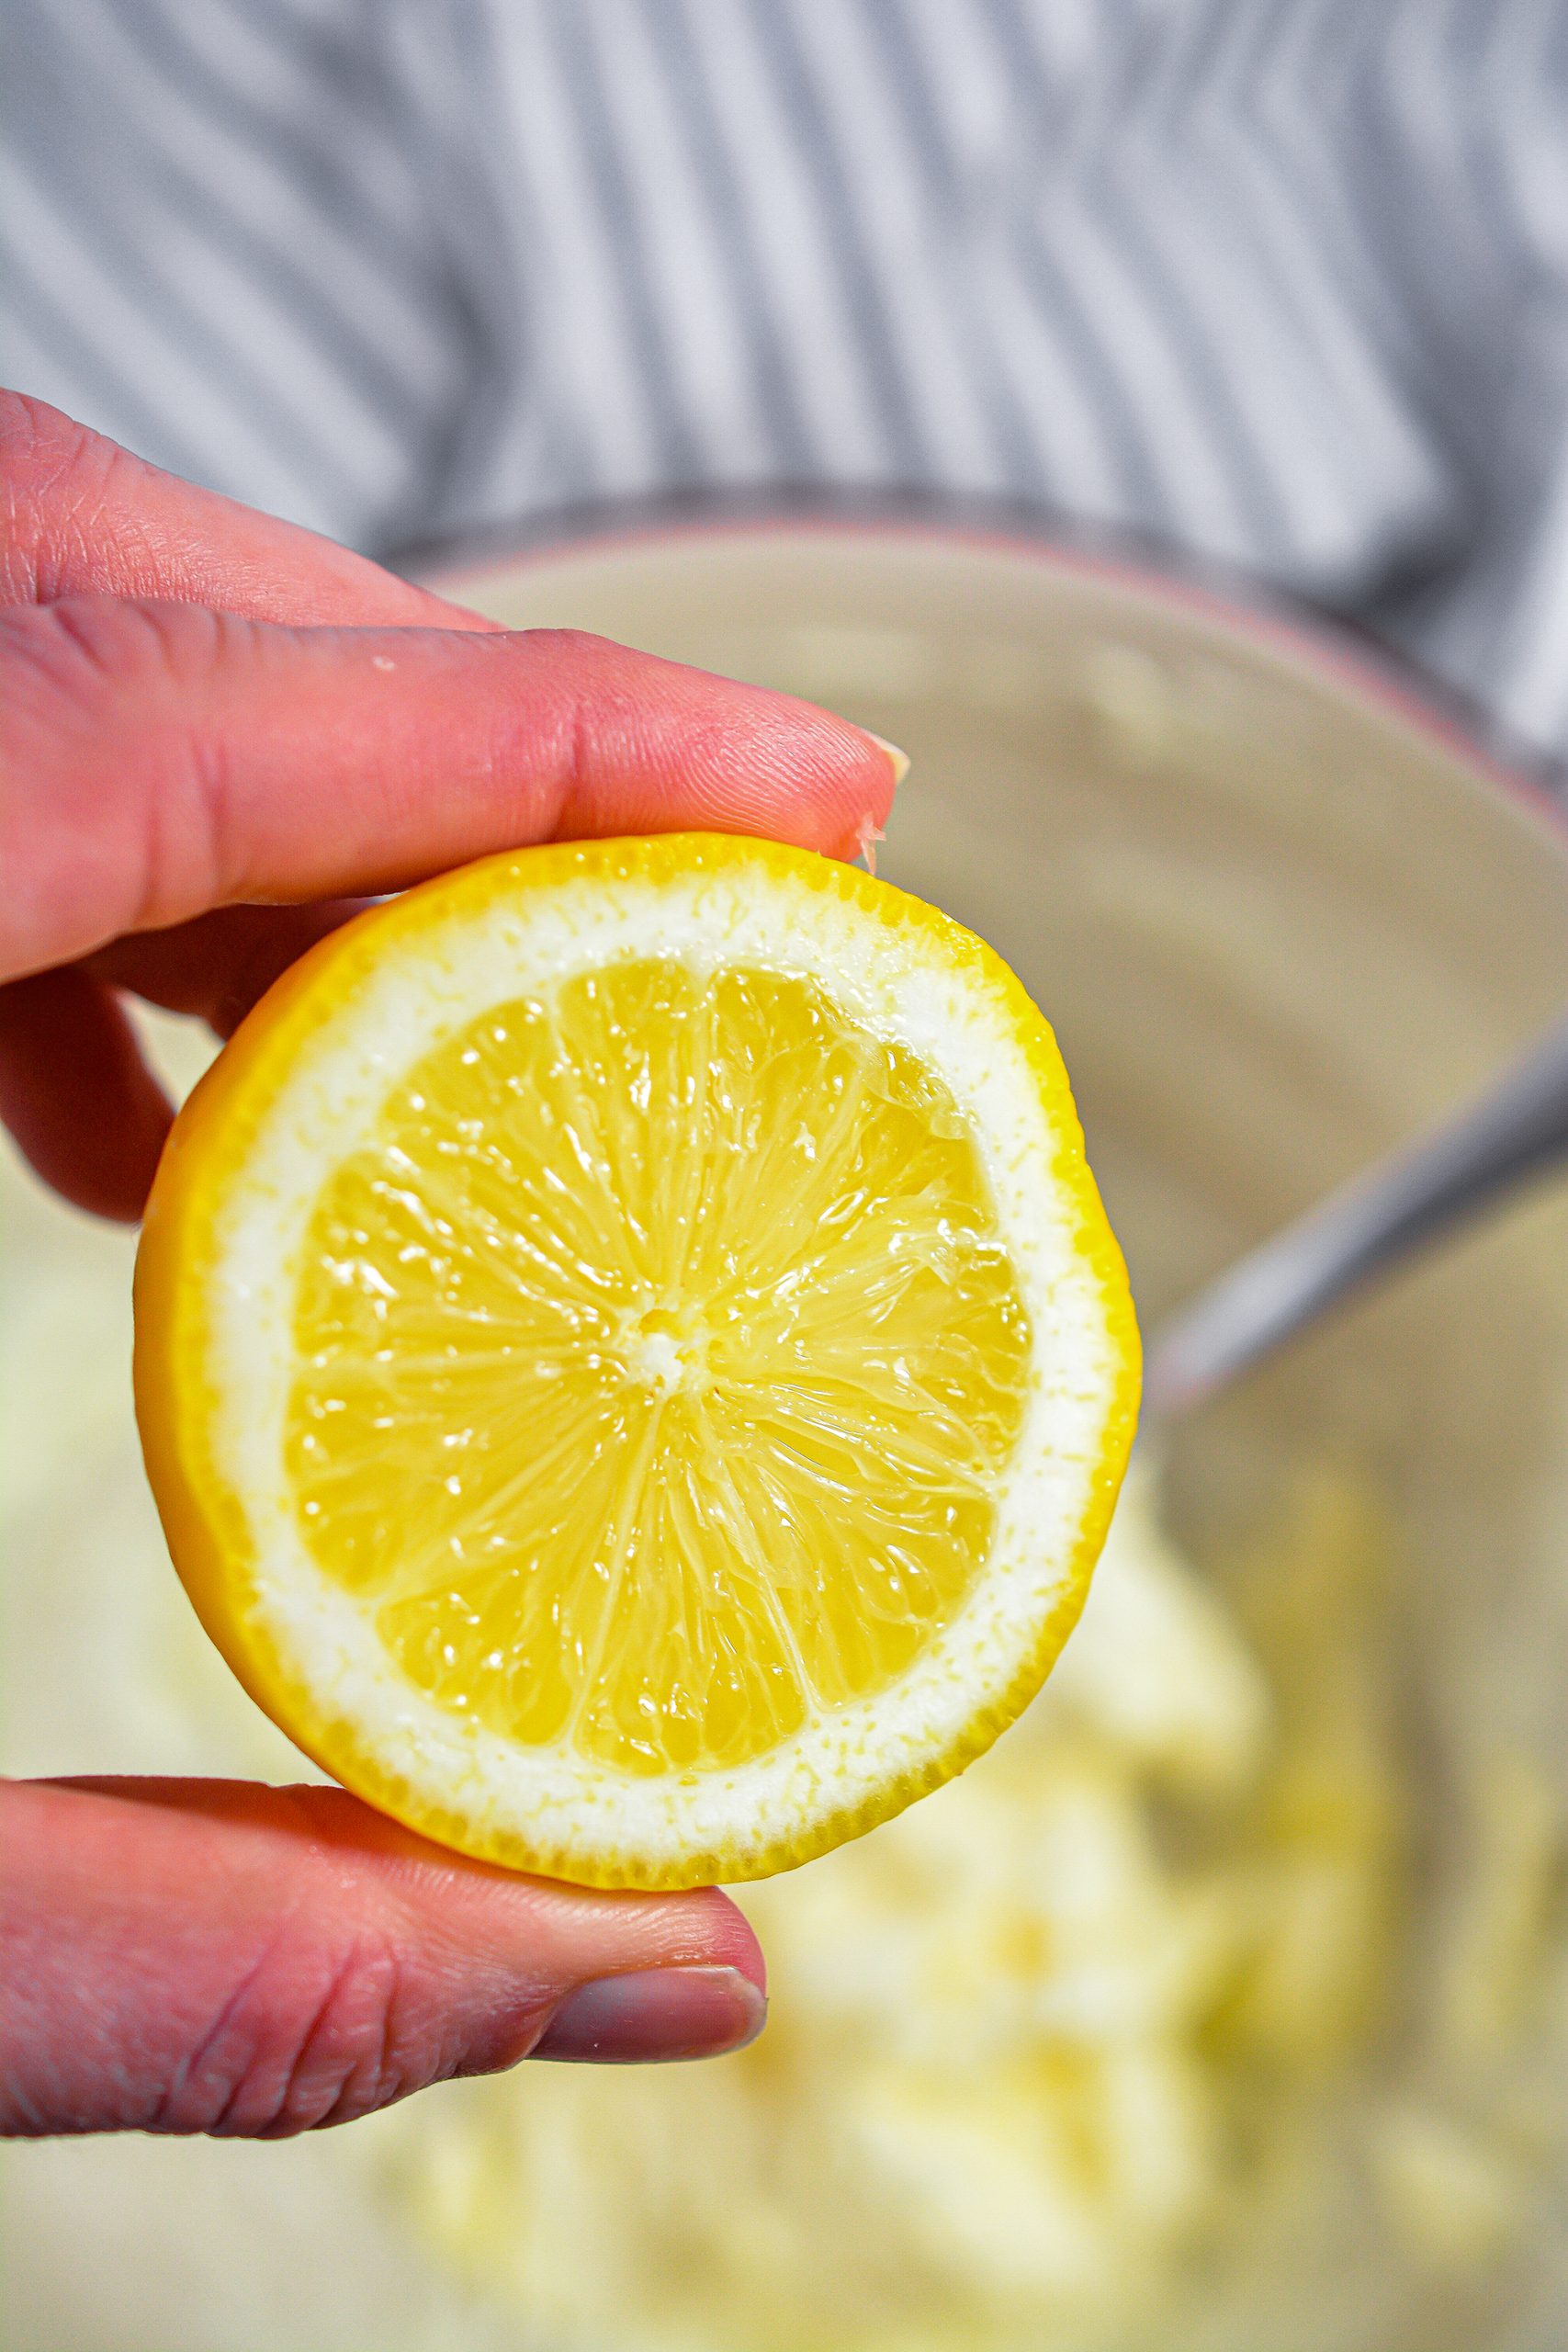  Add the lemon juice.